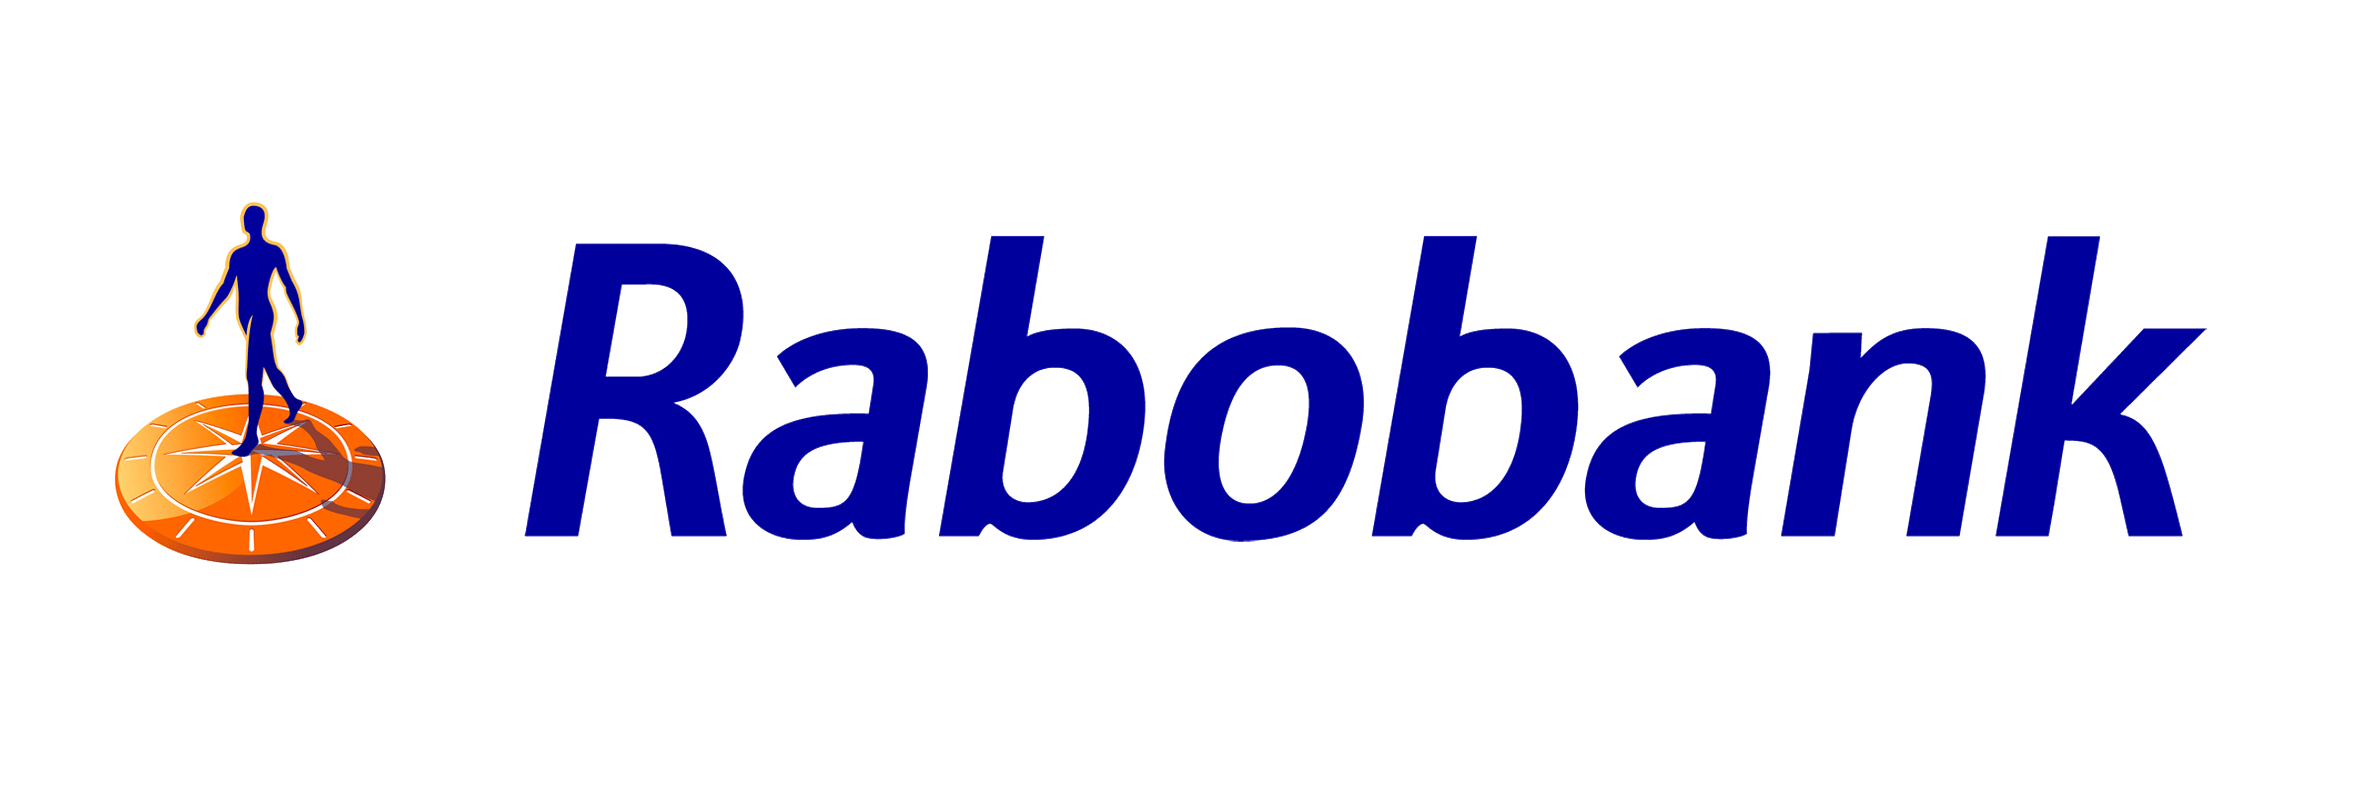 Rabo logo transparant - groesbeekisgenieten